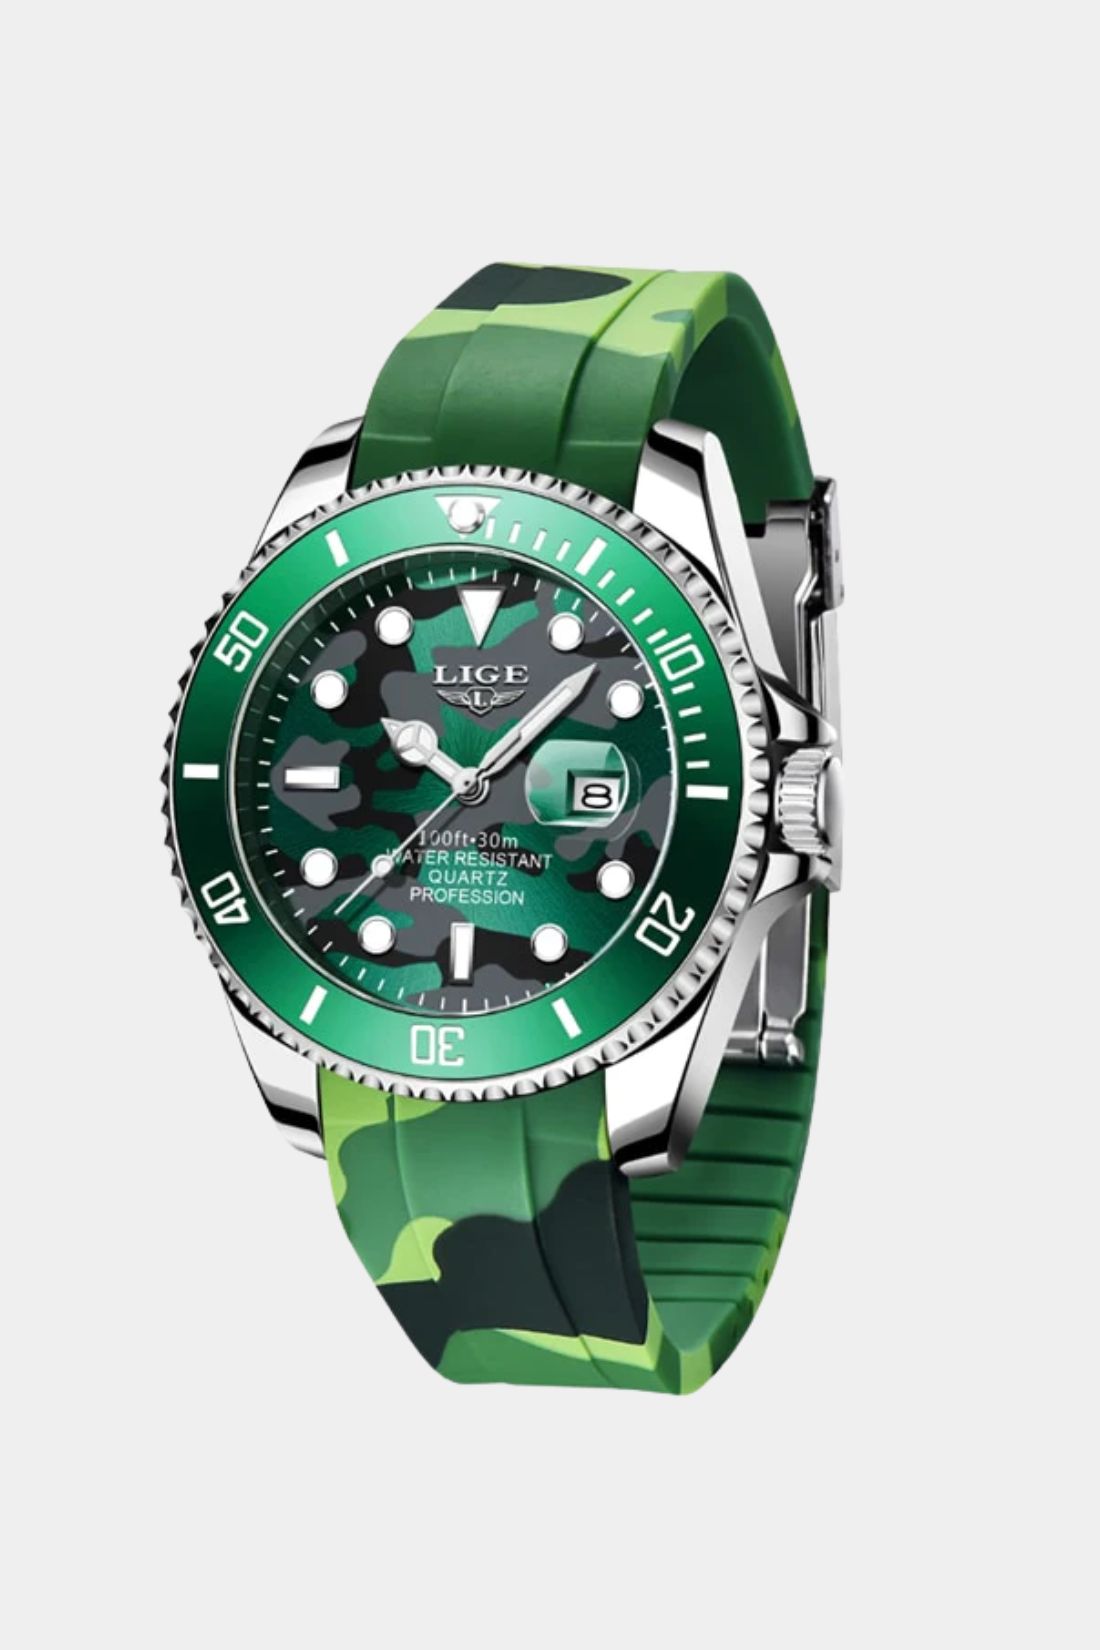 Luxury Camouflage Quartz Sport Wrist Watch For Man